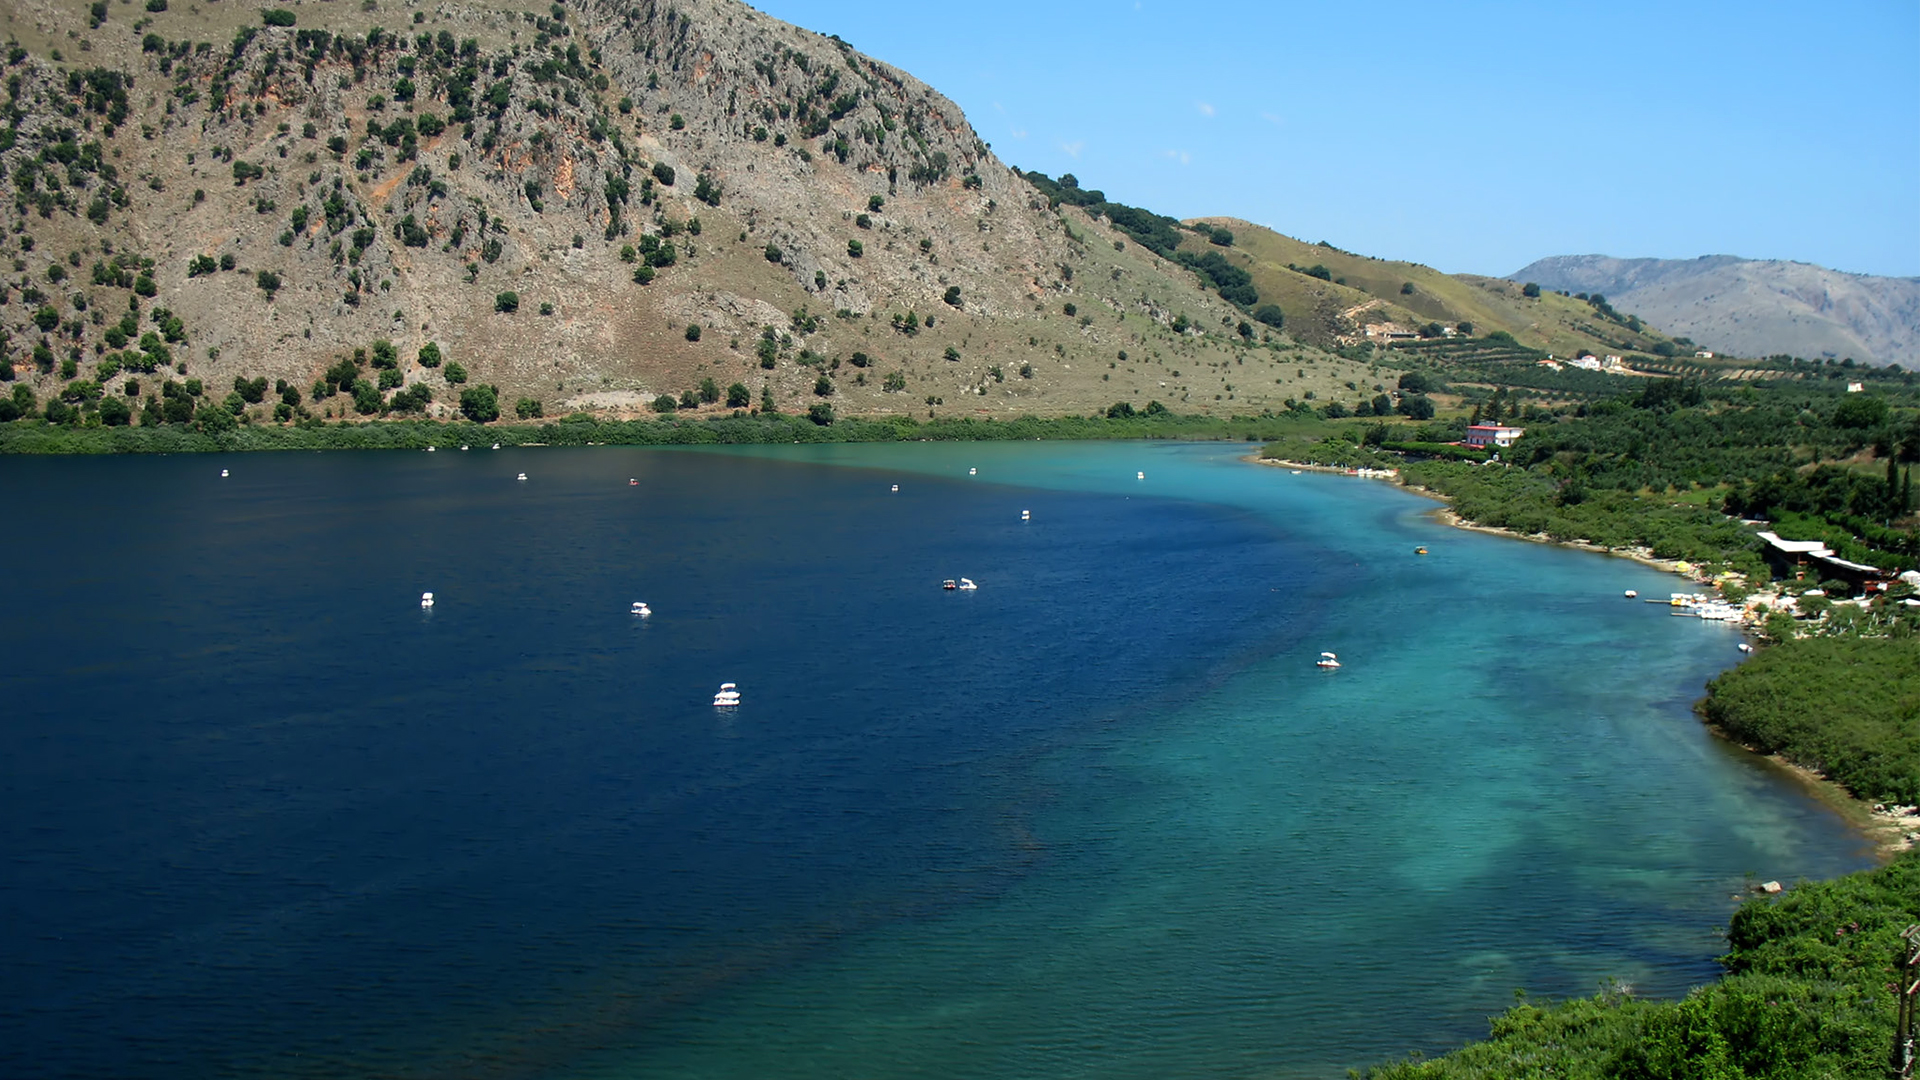 Kournas Lake: The Only Natural Freshwater Lake In Crete